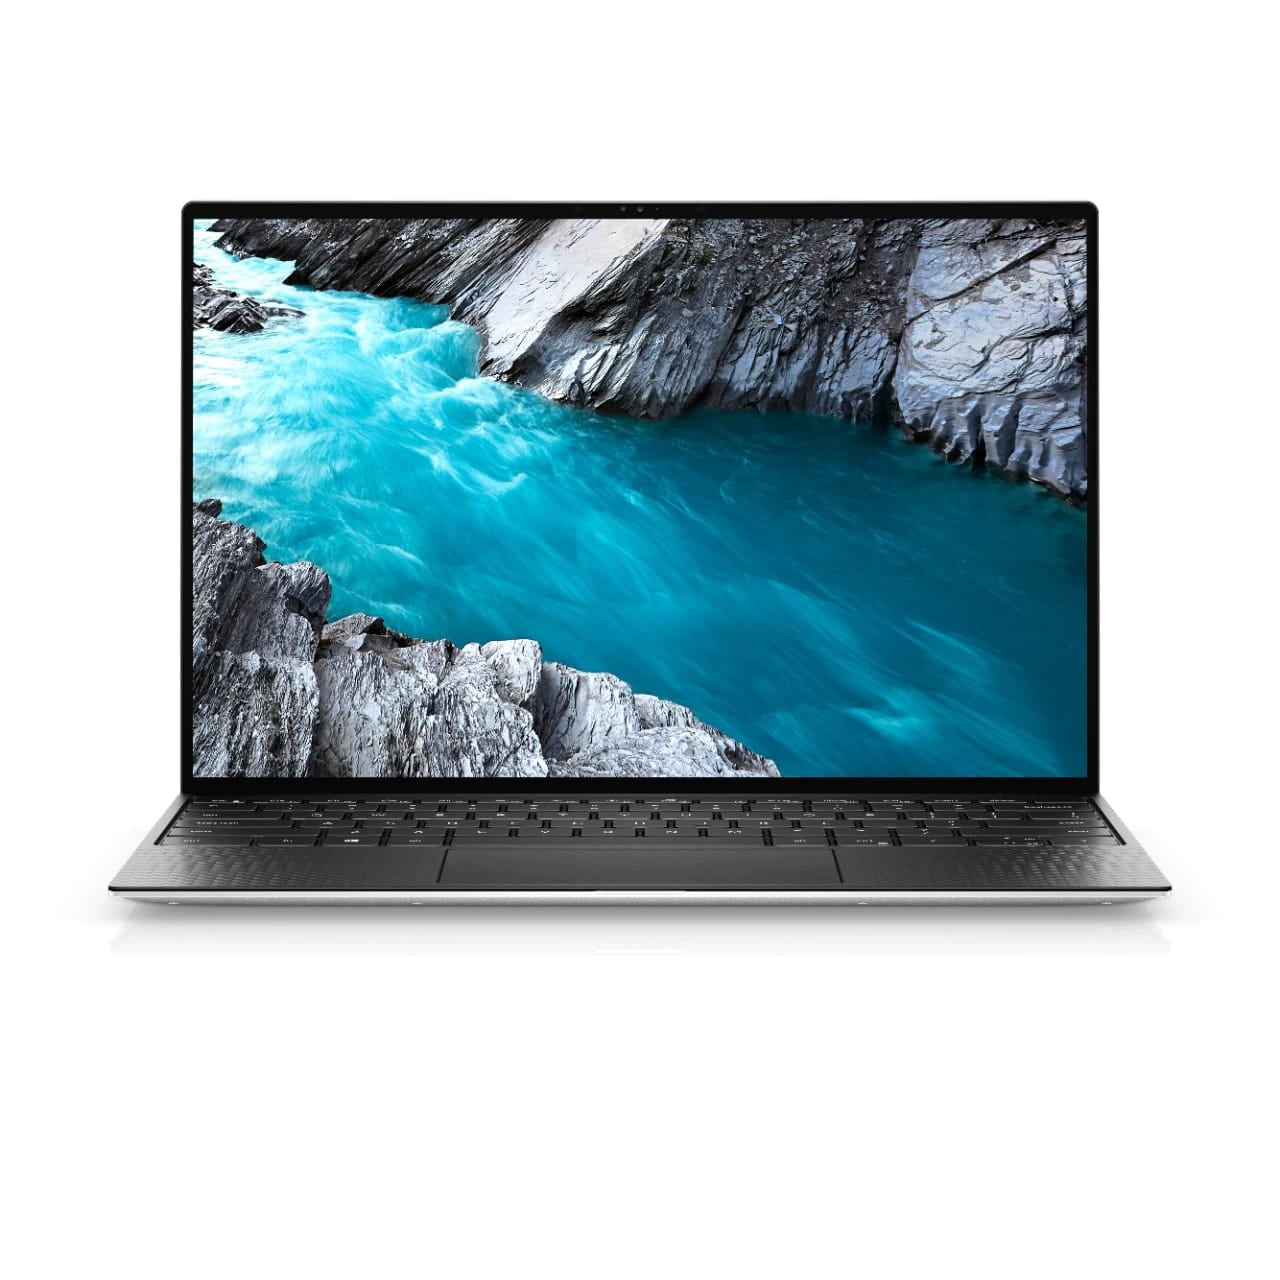 omvang Arrangement accessoires Restored Dell XPS 9300 Laptop (2020) | 13.3" 4K Touch | Core i5 - 256GB SSD  - 8GB RAM | 4 Cores @ 3.6 GHz - 10th Gen CPU (Refurbished) - Walmart.com